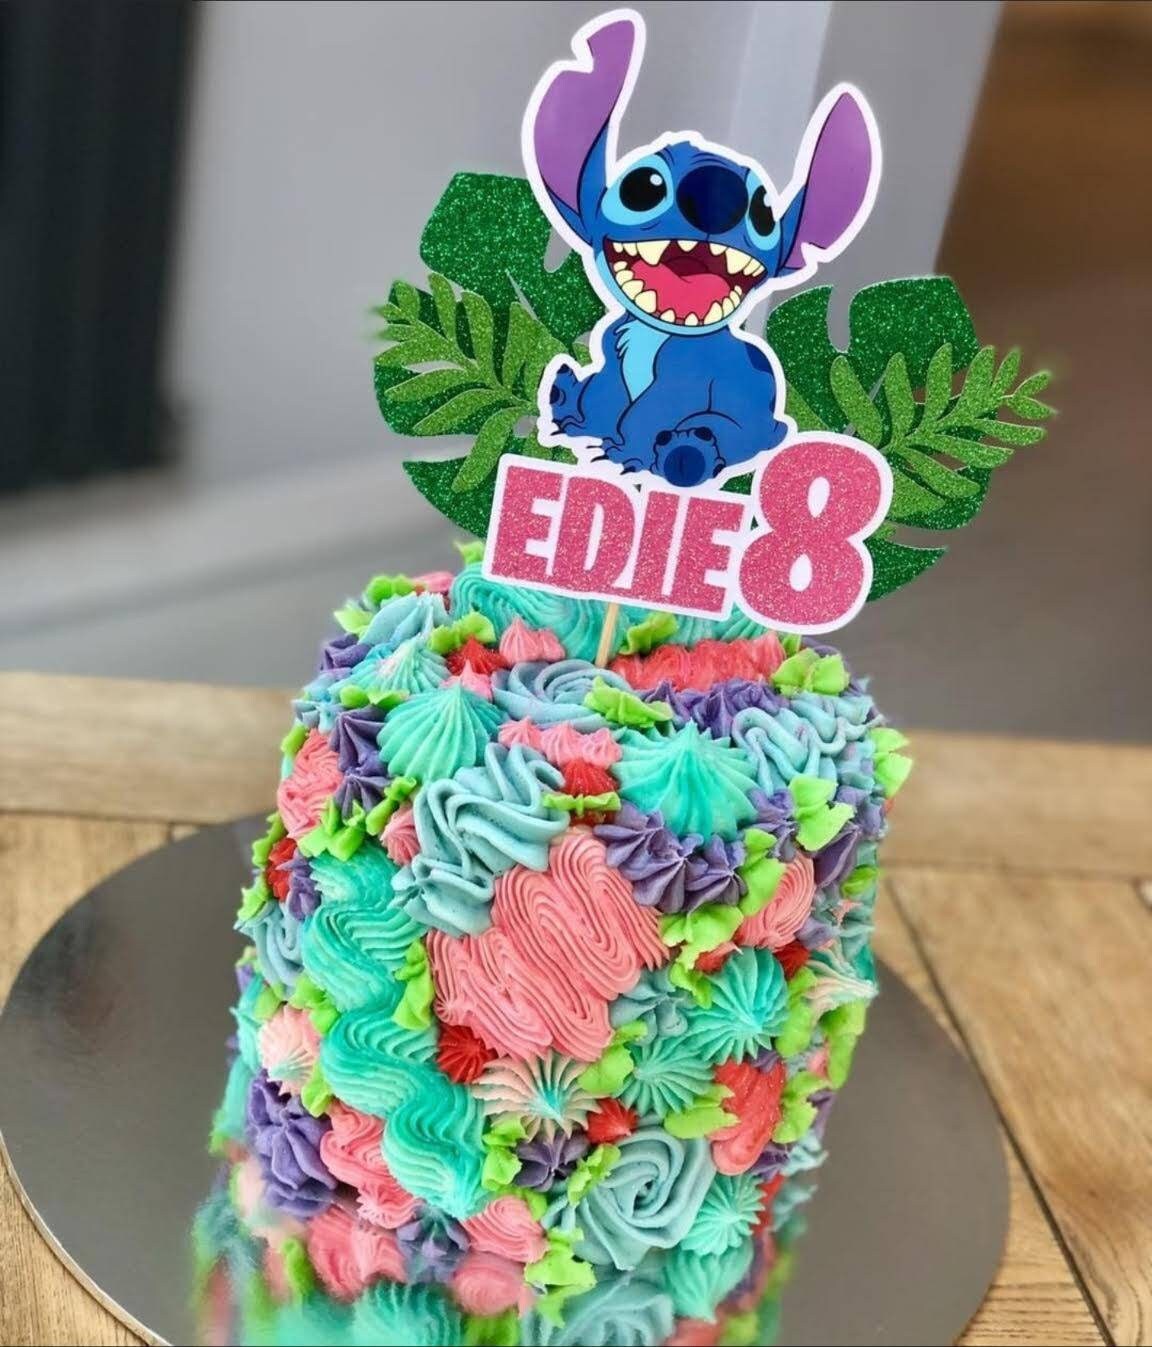 Lilo and Stitch Cake Design Images (Cake Gateau Ideas) - 2020 | Lilo and stitch  cake, Disney birthday cakes, Stitch cake